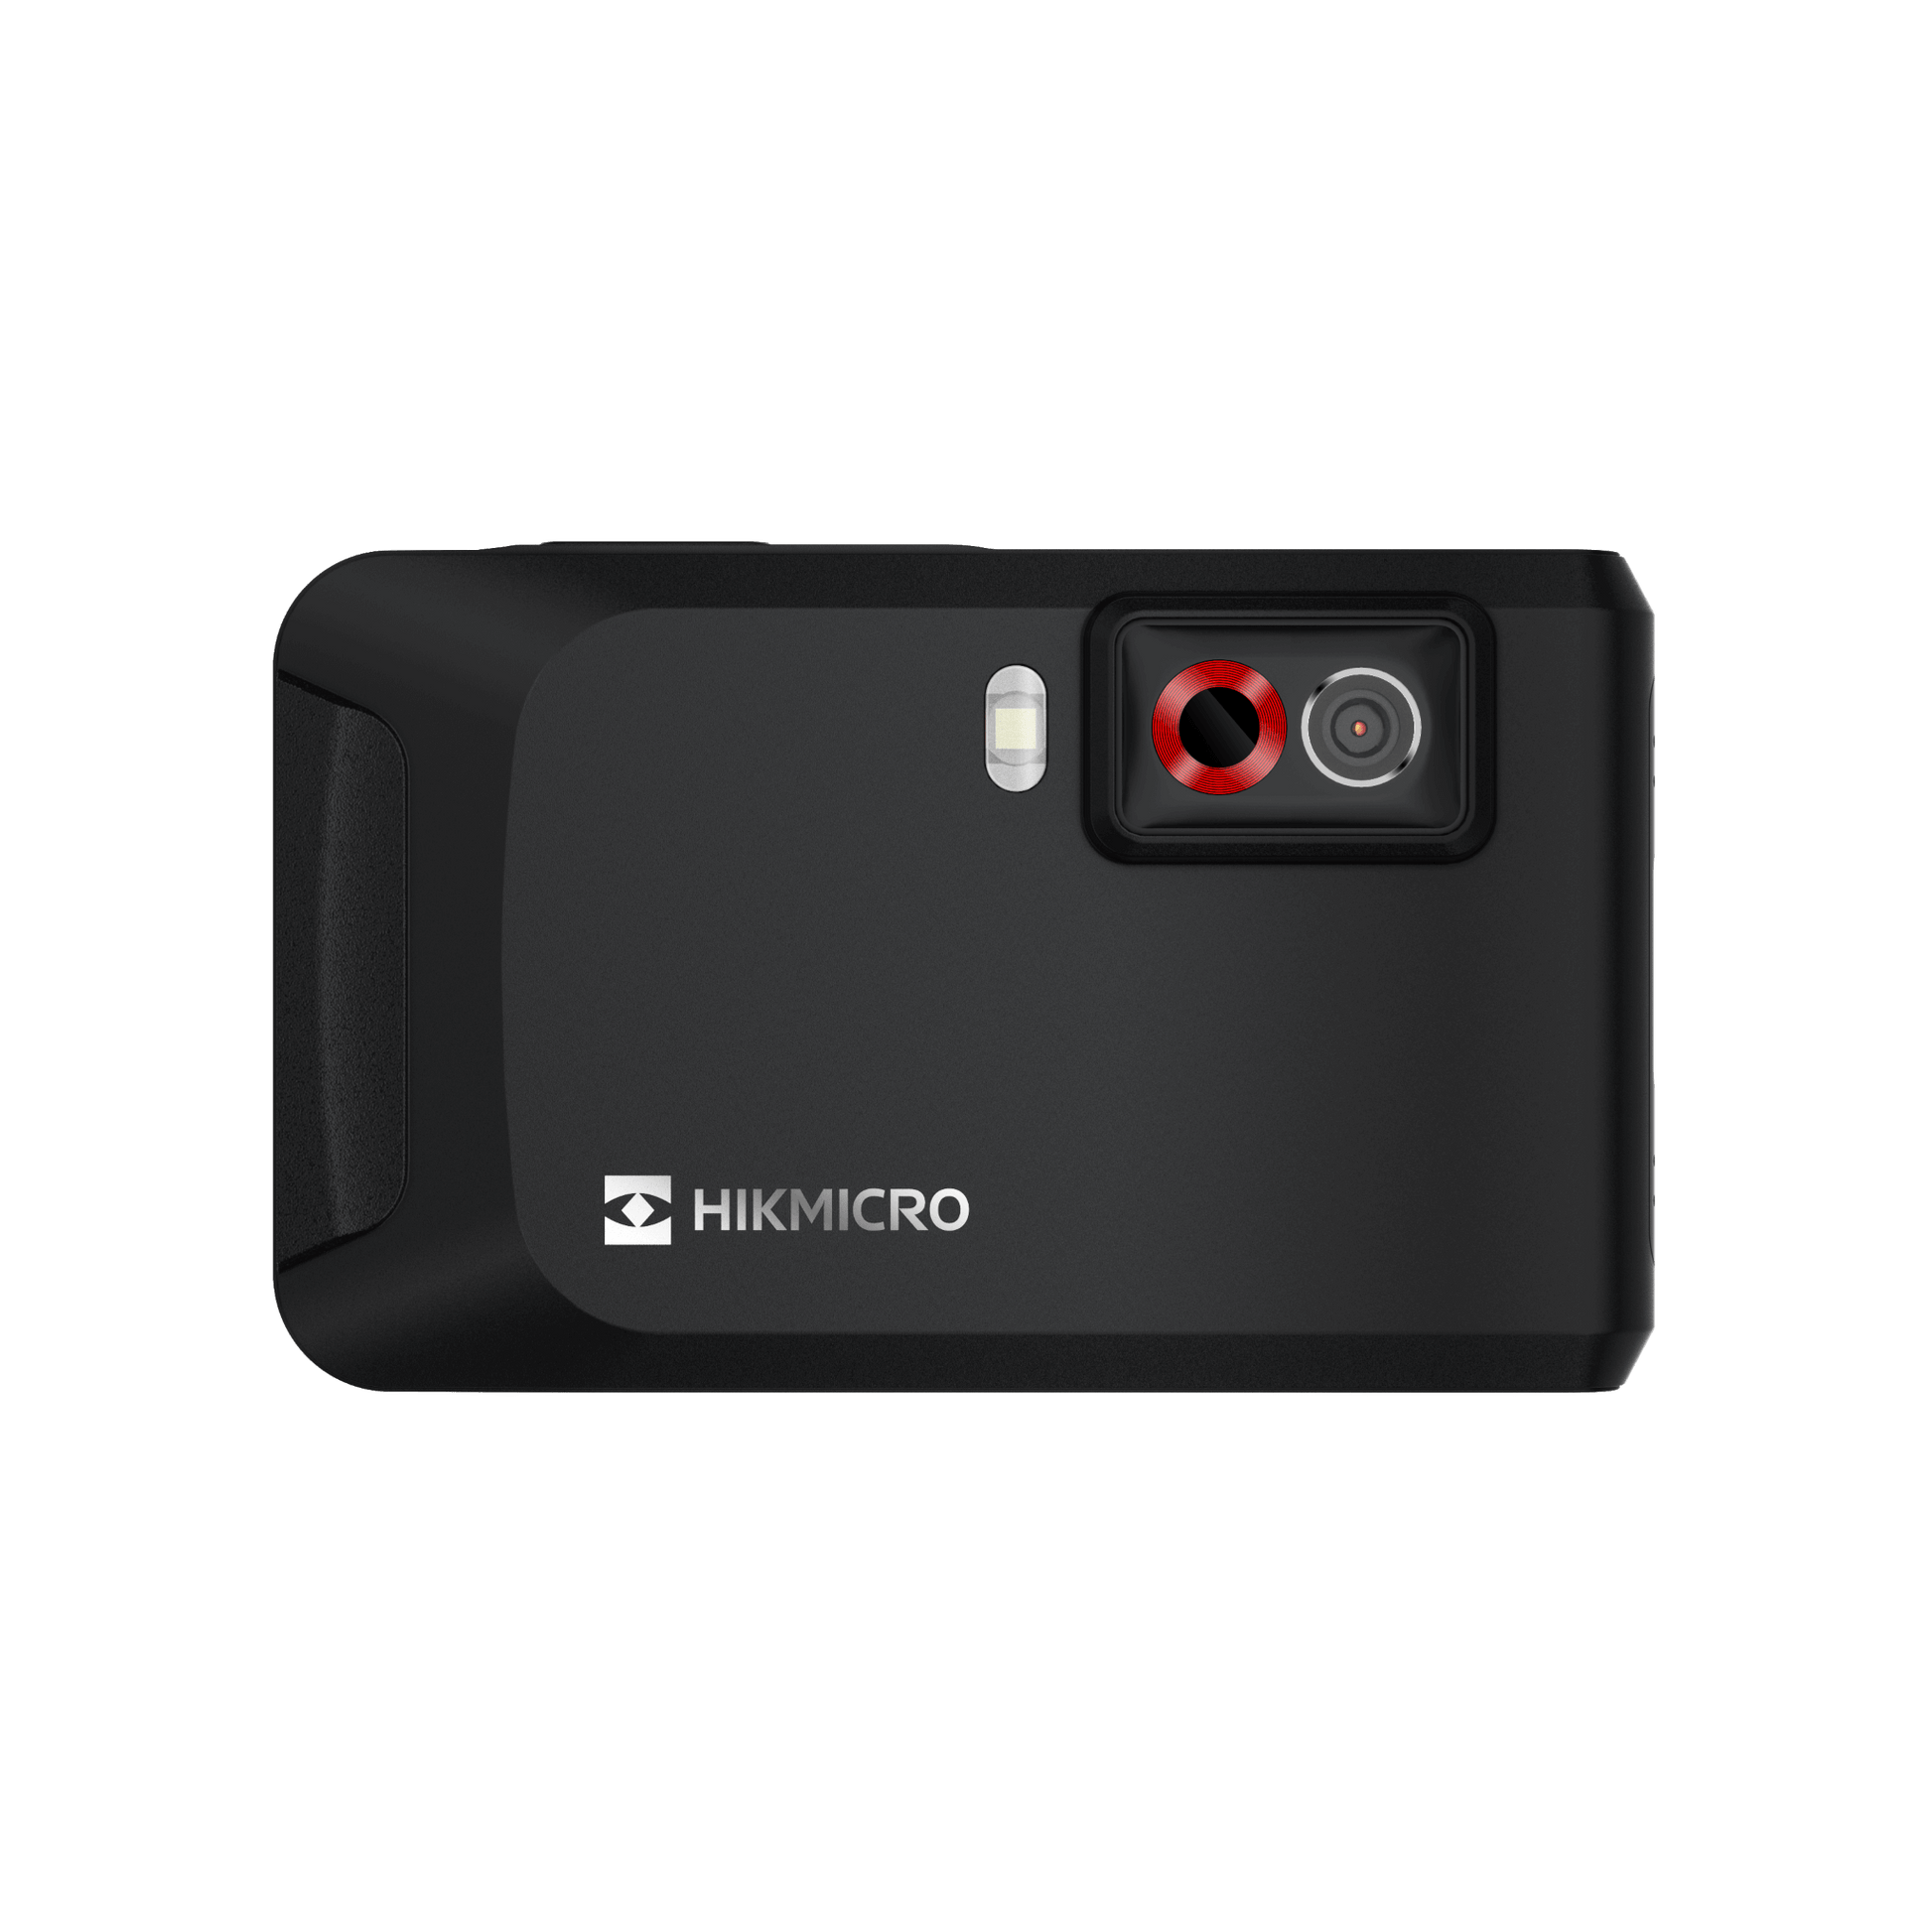 HikMicro Pocket2 Handheld Thermal Imager Front Lens View